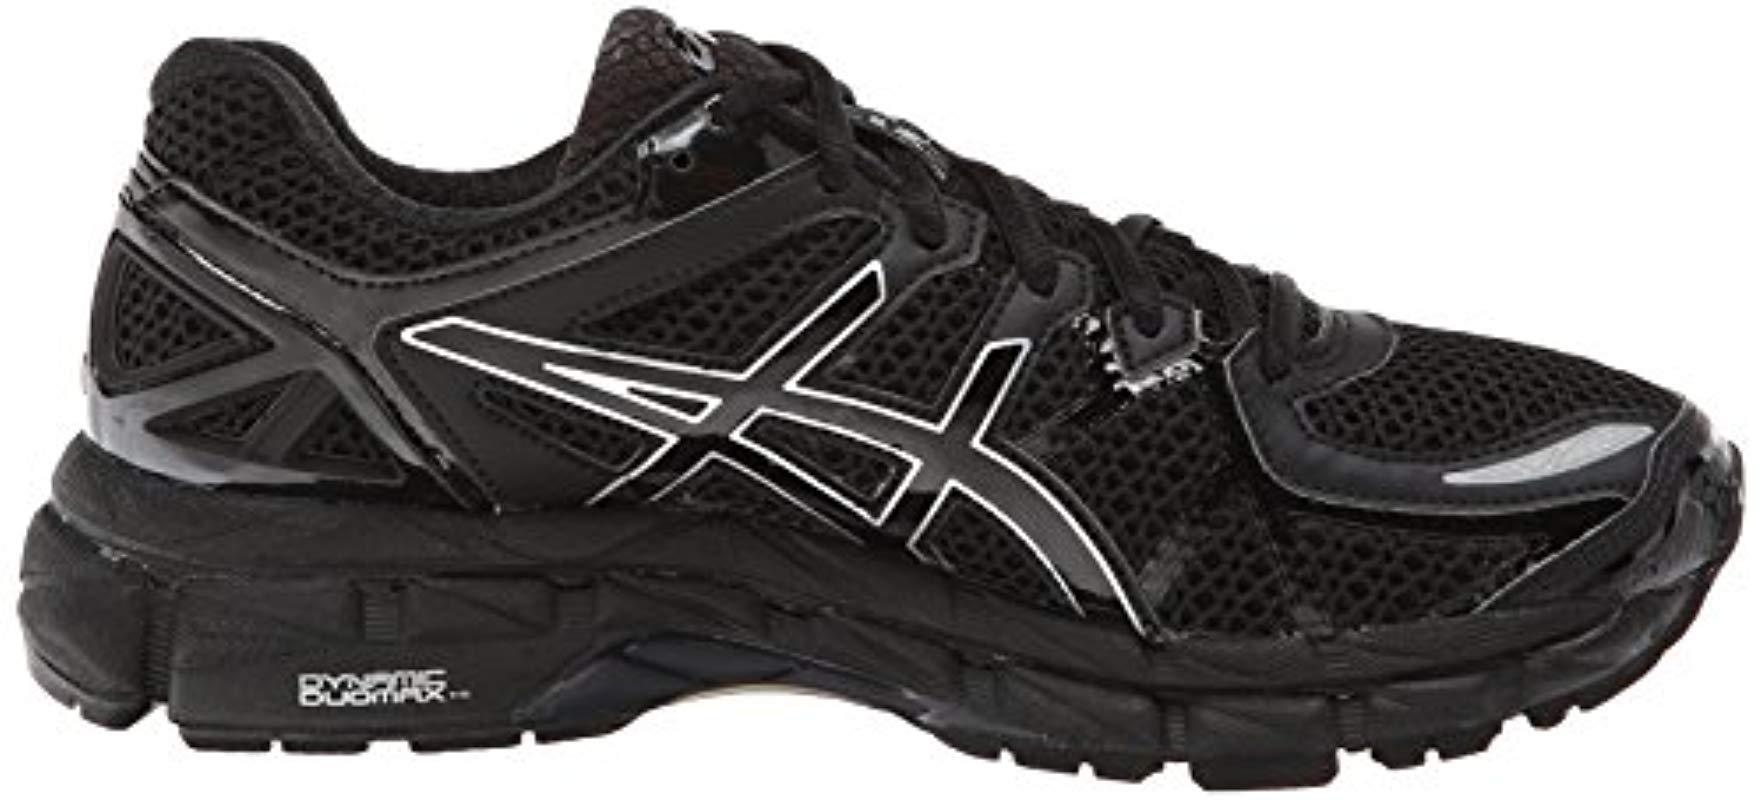 Asics Gel-kayano 21 Running Shoe in Onyx/Black/Silver (Black) | Lyst